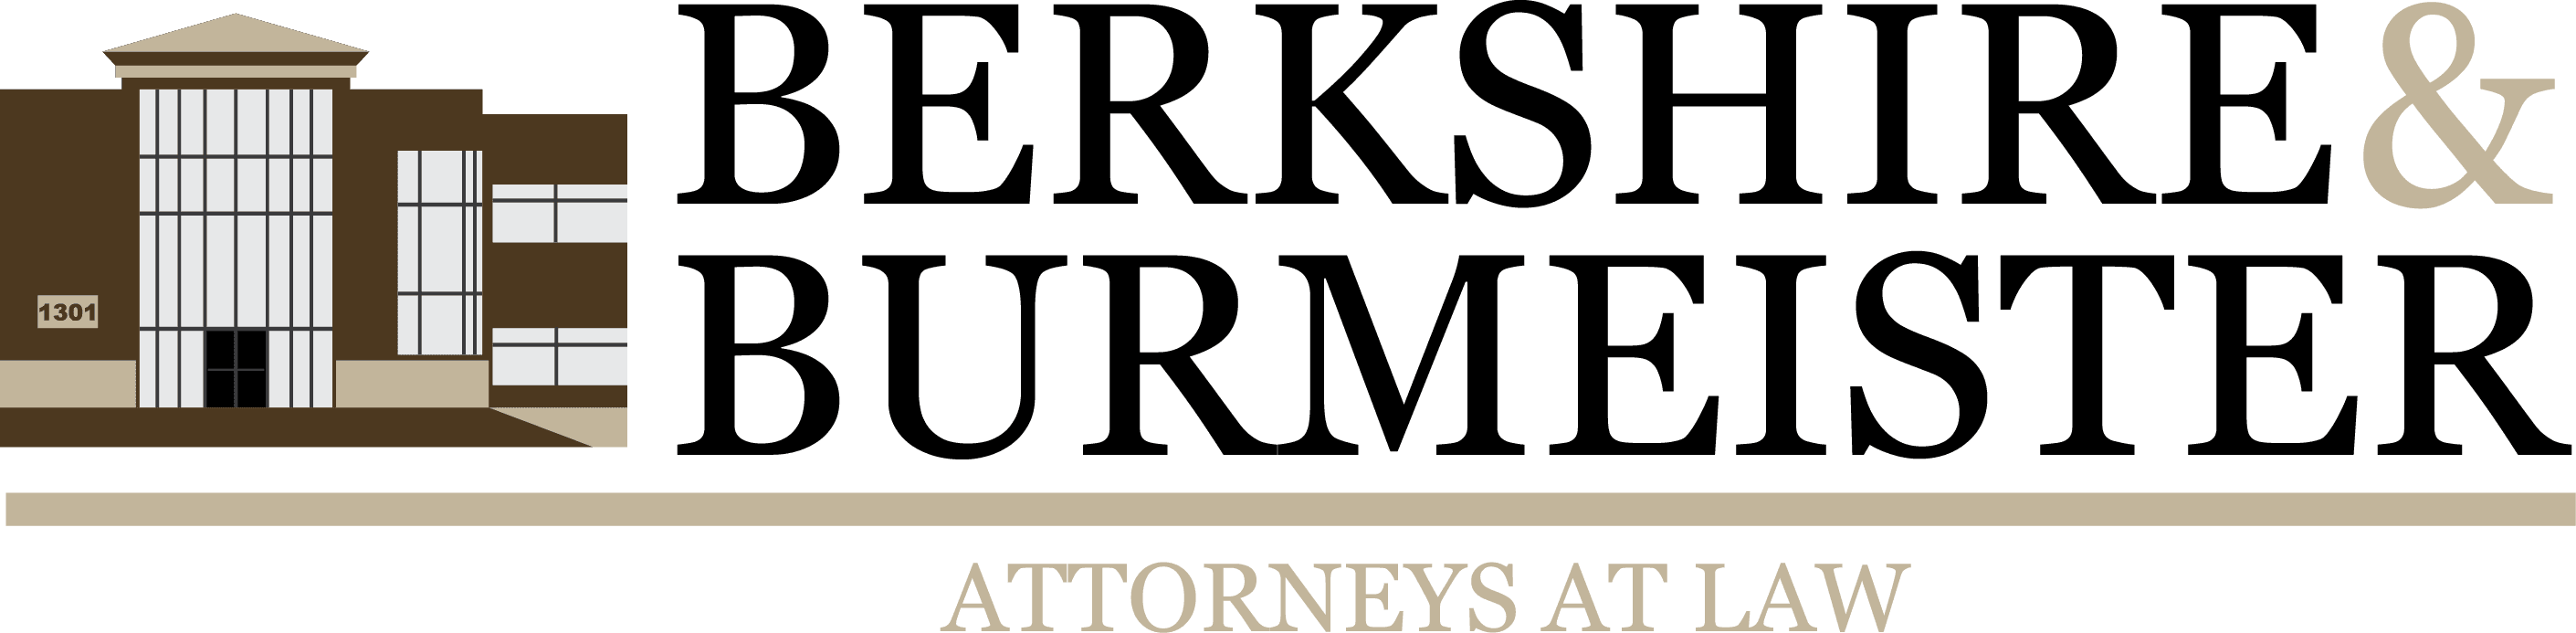 Berkshire & Burmeister Attorneys at Law